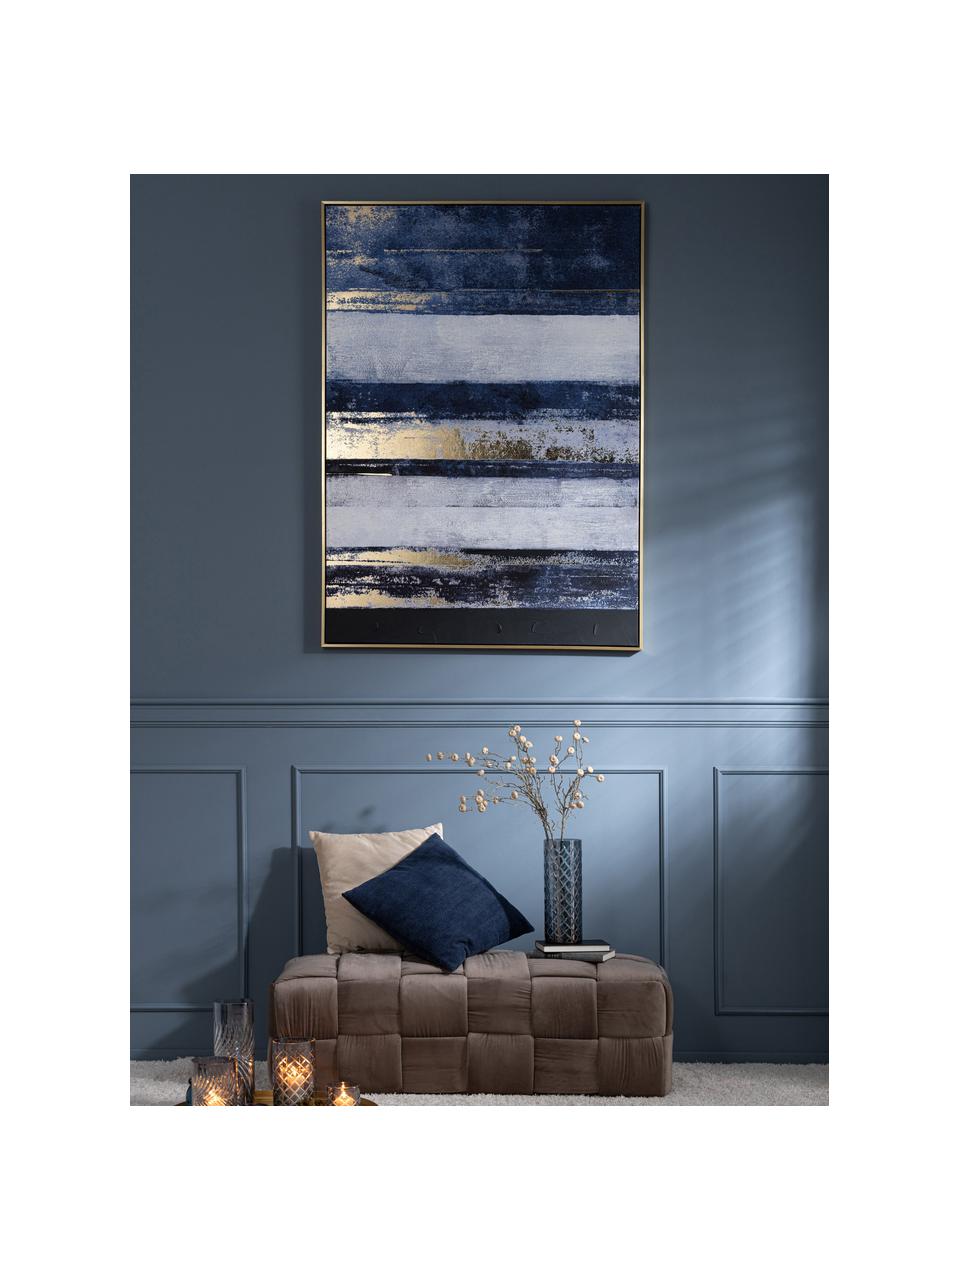 Leinwanddruck Strokes, Rahmen: Kiefernholz, Kunststoff, , Bild: Leinwand, Blau, Weiß, Goldfarben, 103 x 143 cm